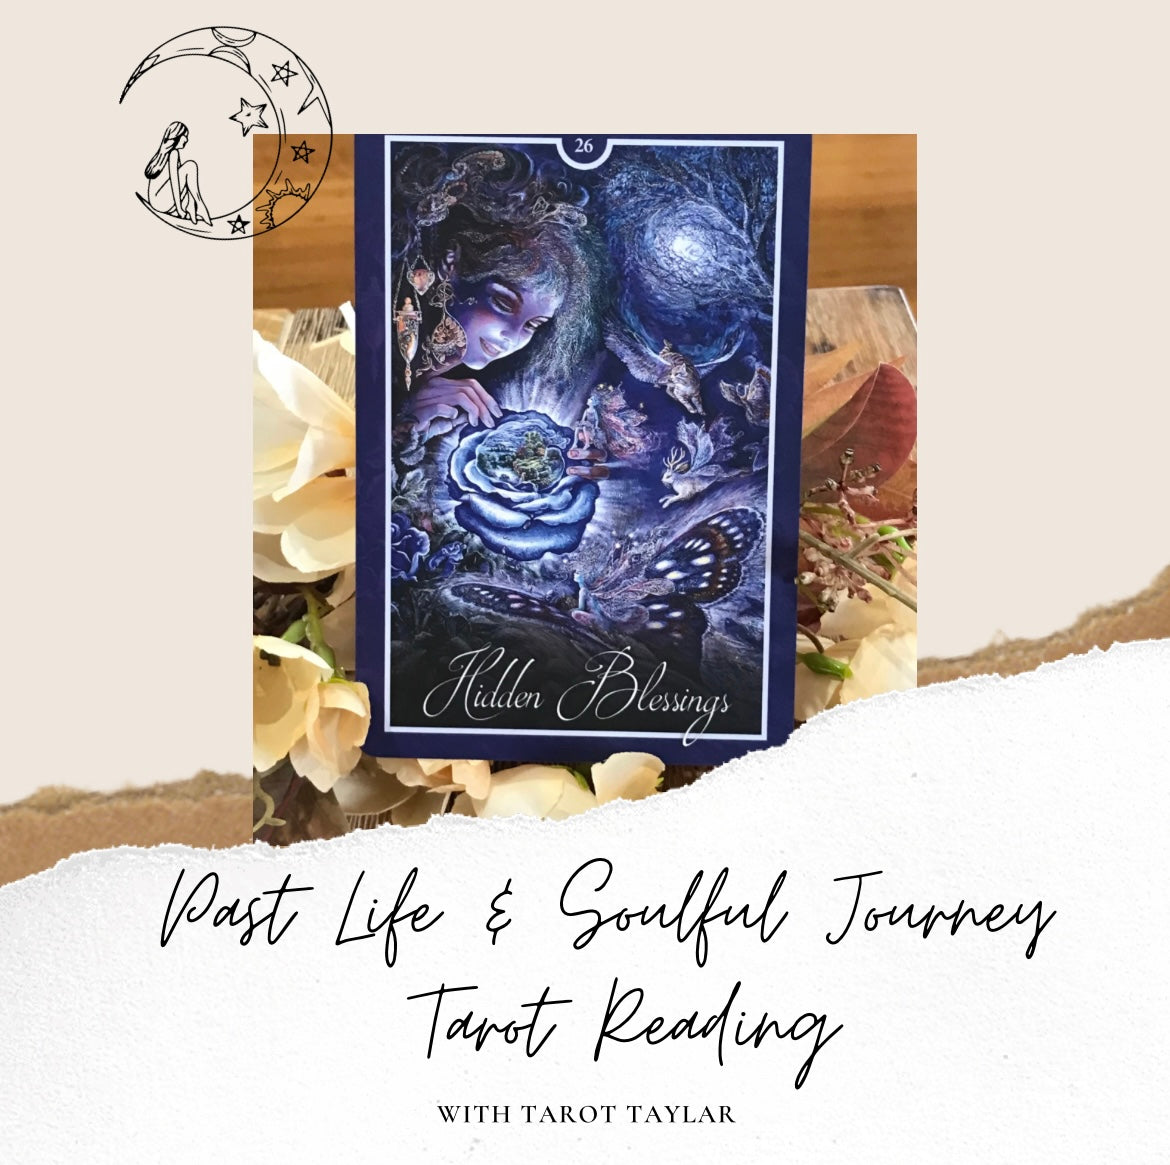 Past Life & Soulful Journey Tarot Reading